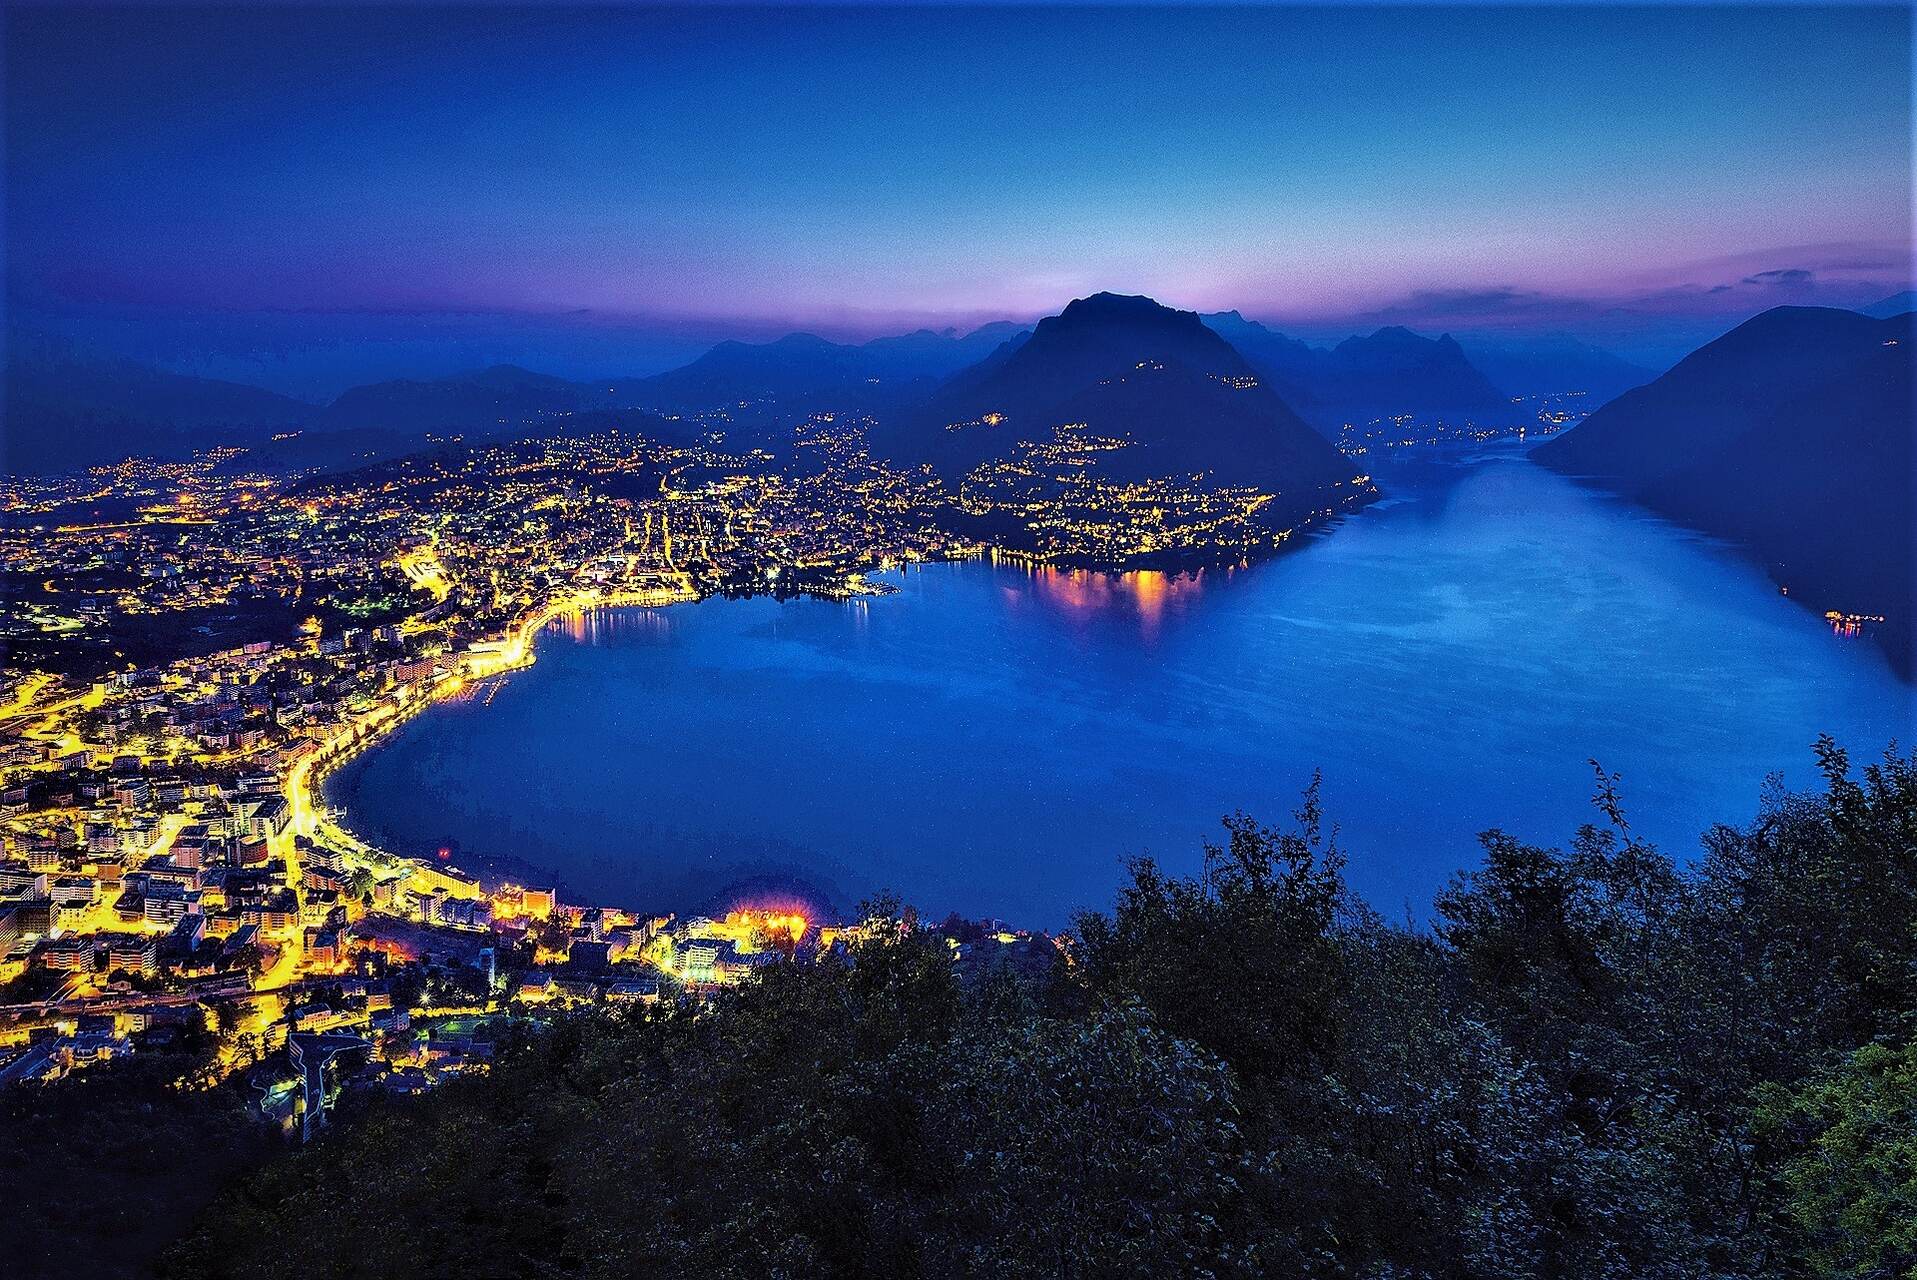 Ente Turistico del Lugano: staden Lugano i kantonen Ticino sett från Monte San Salvatore